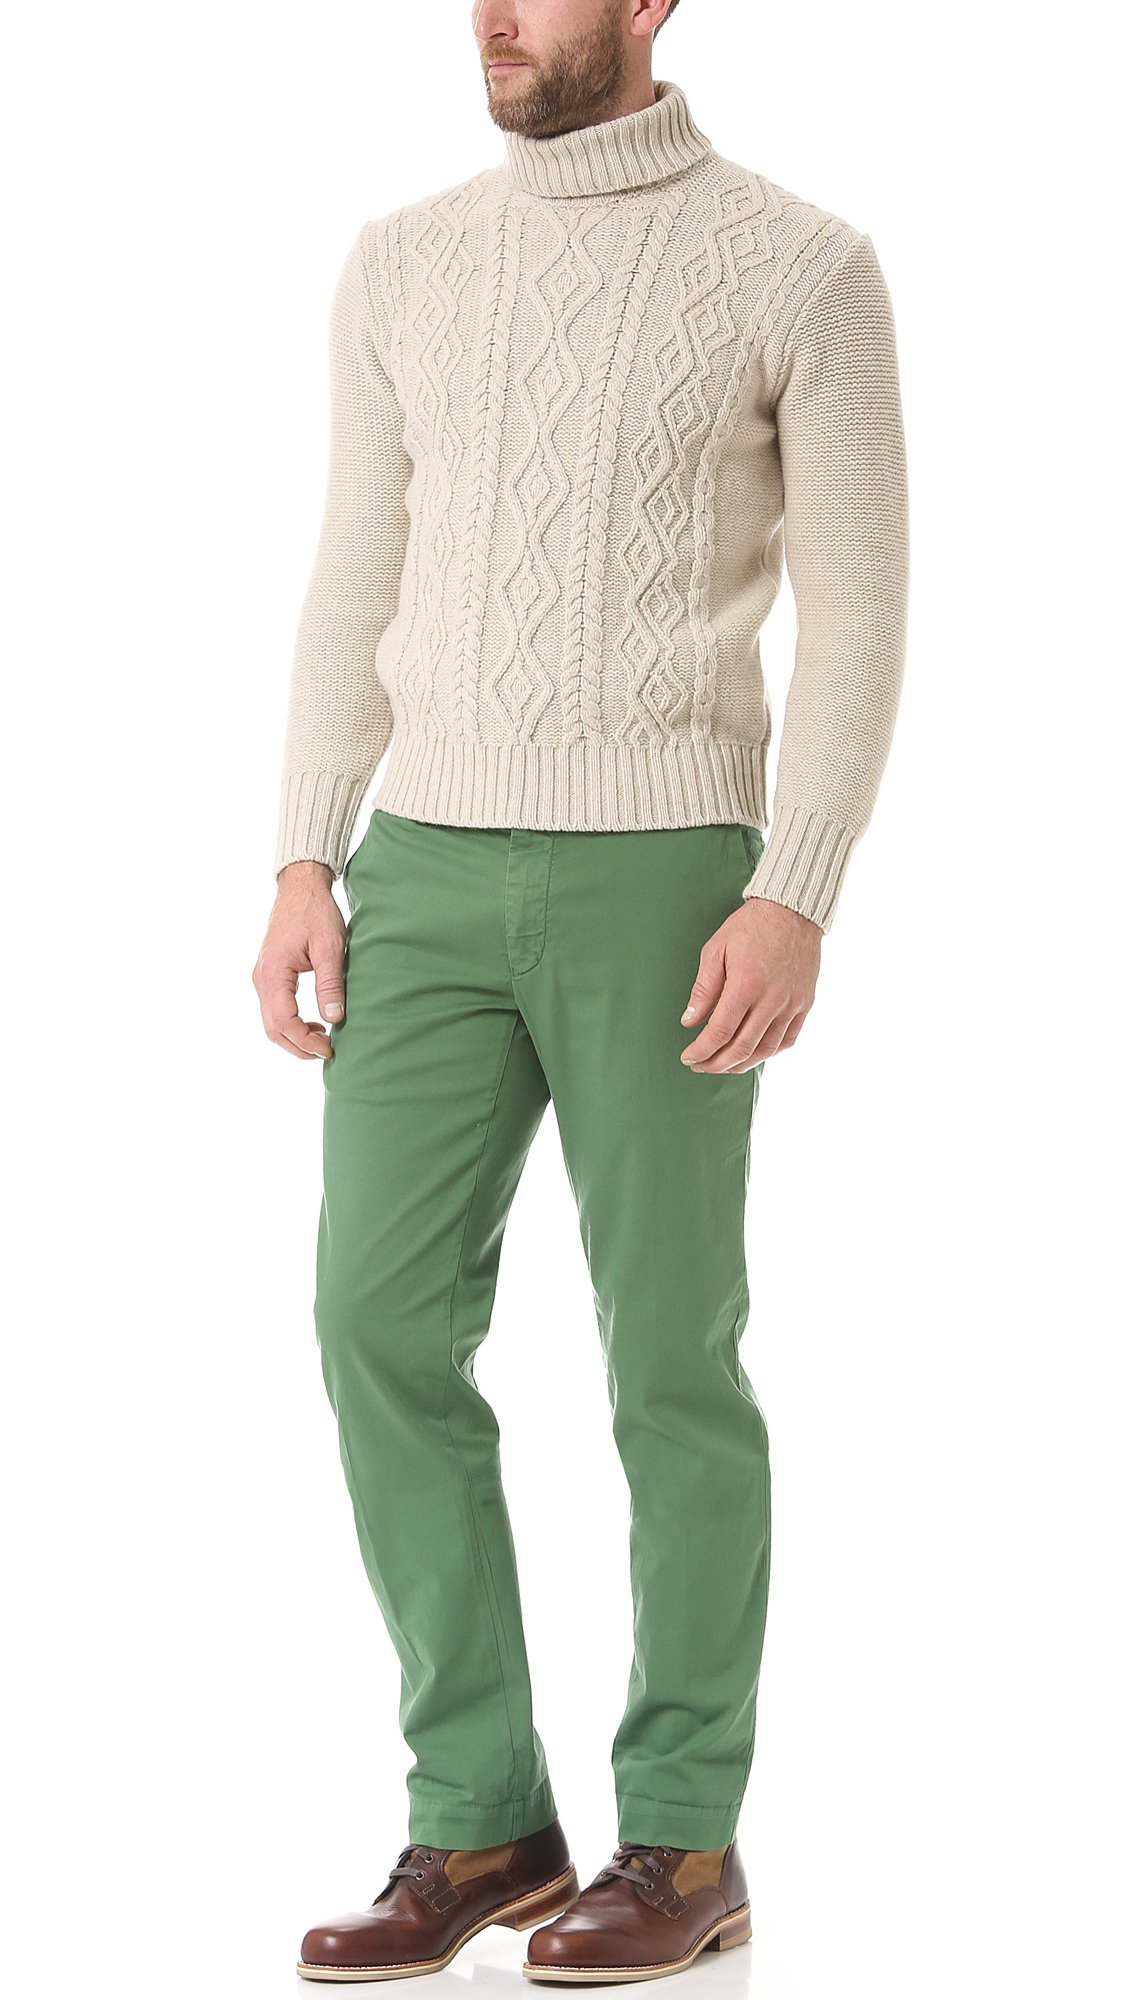 Lyst - Inis meáin Aran Turtleneck Sweater in Natural for Men